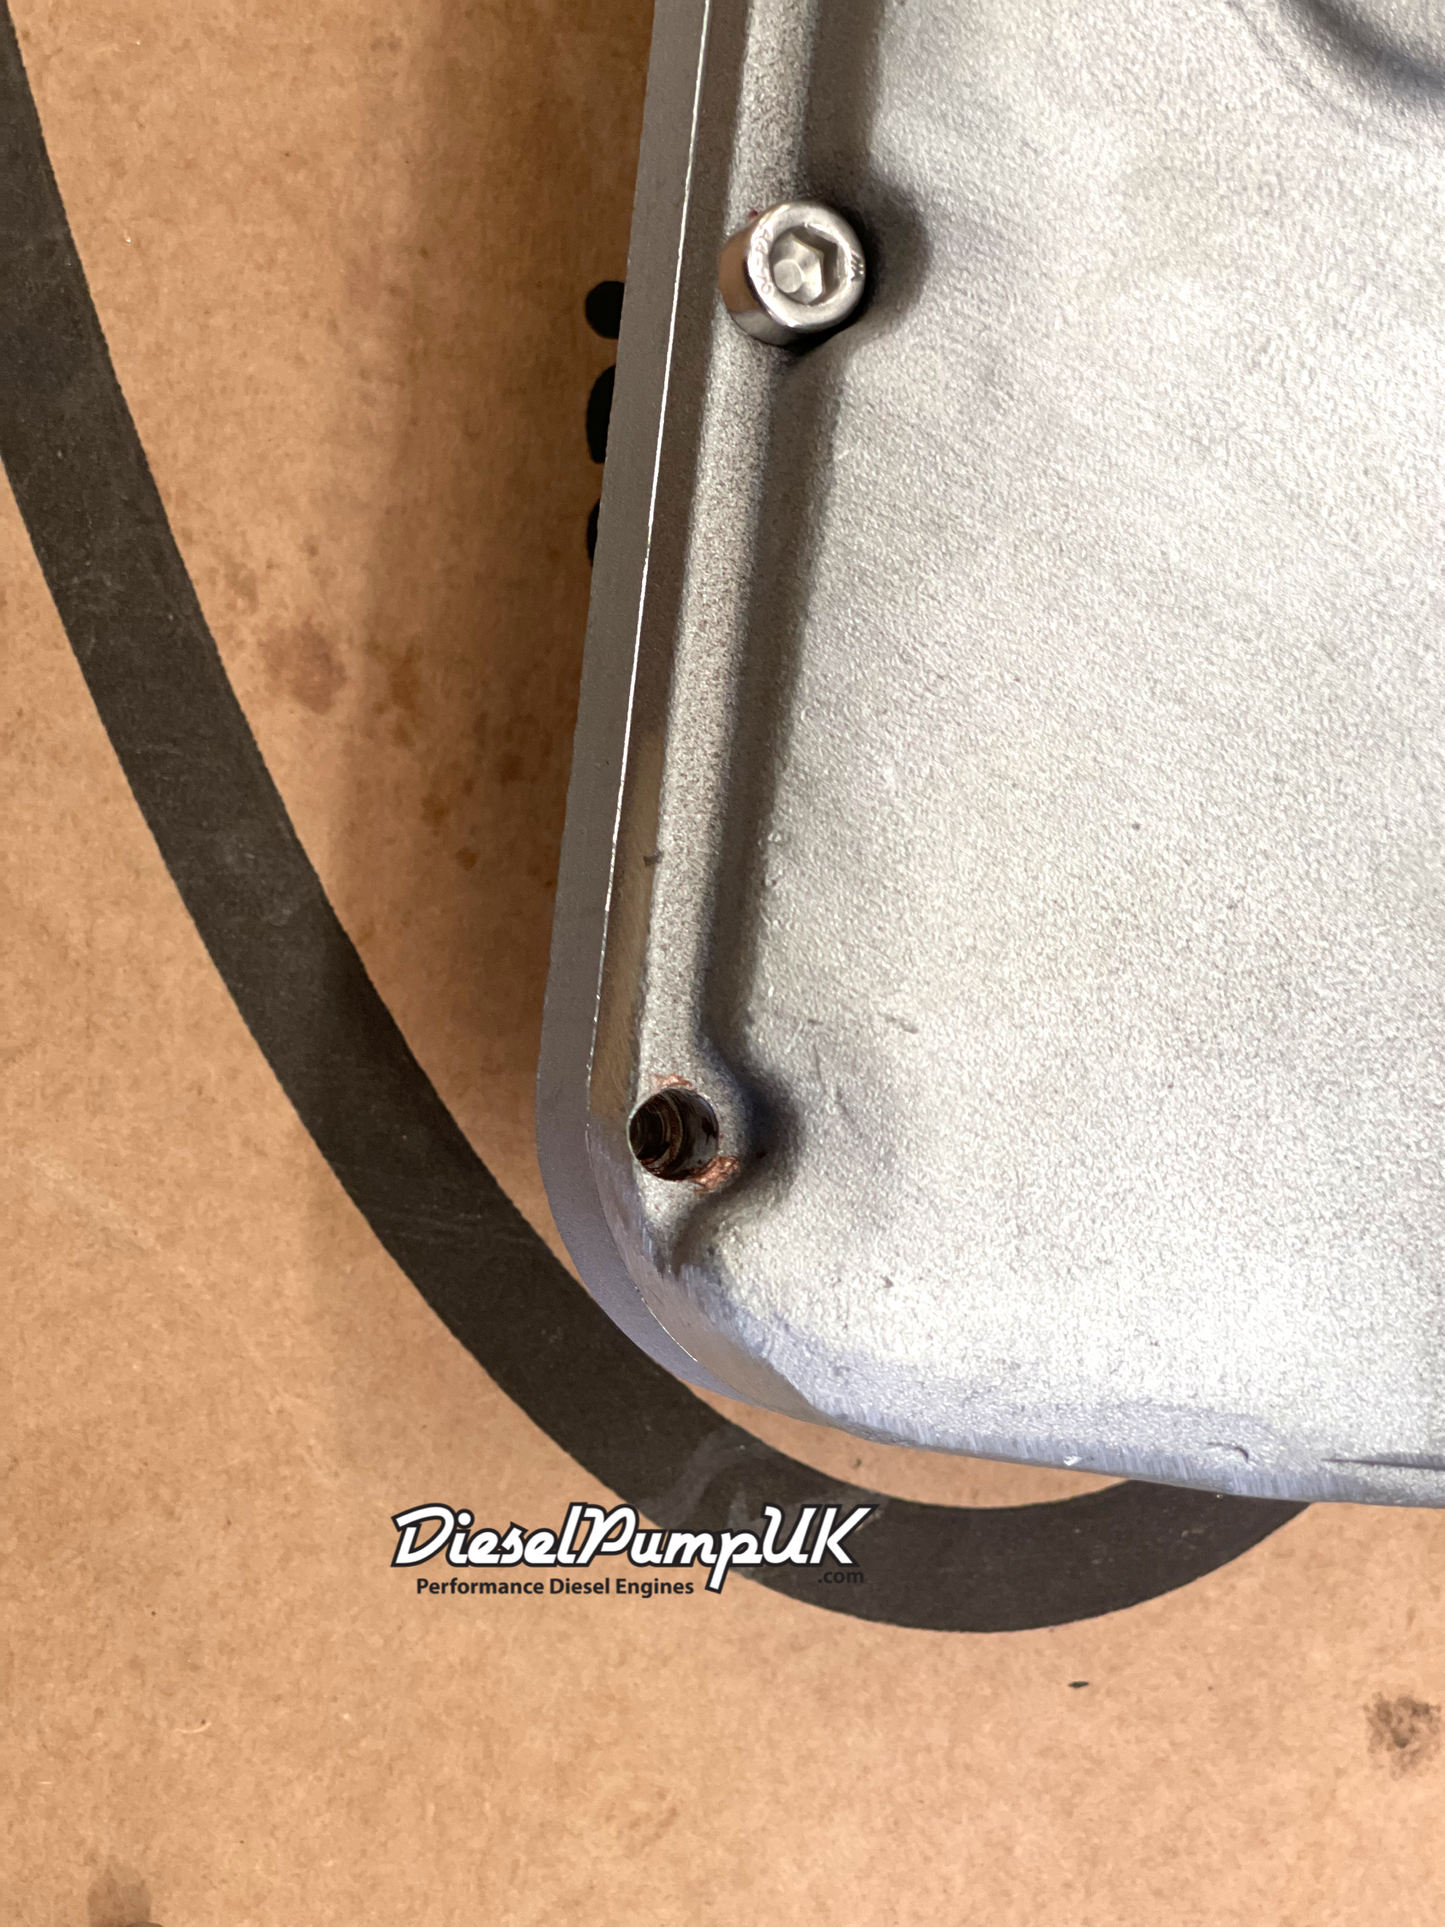 Cast Aluminium Inlet Manifold OM606 - Minor Casting Defects